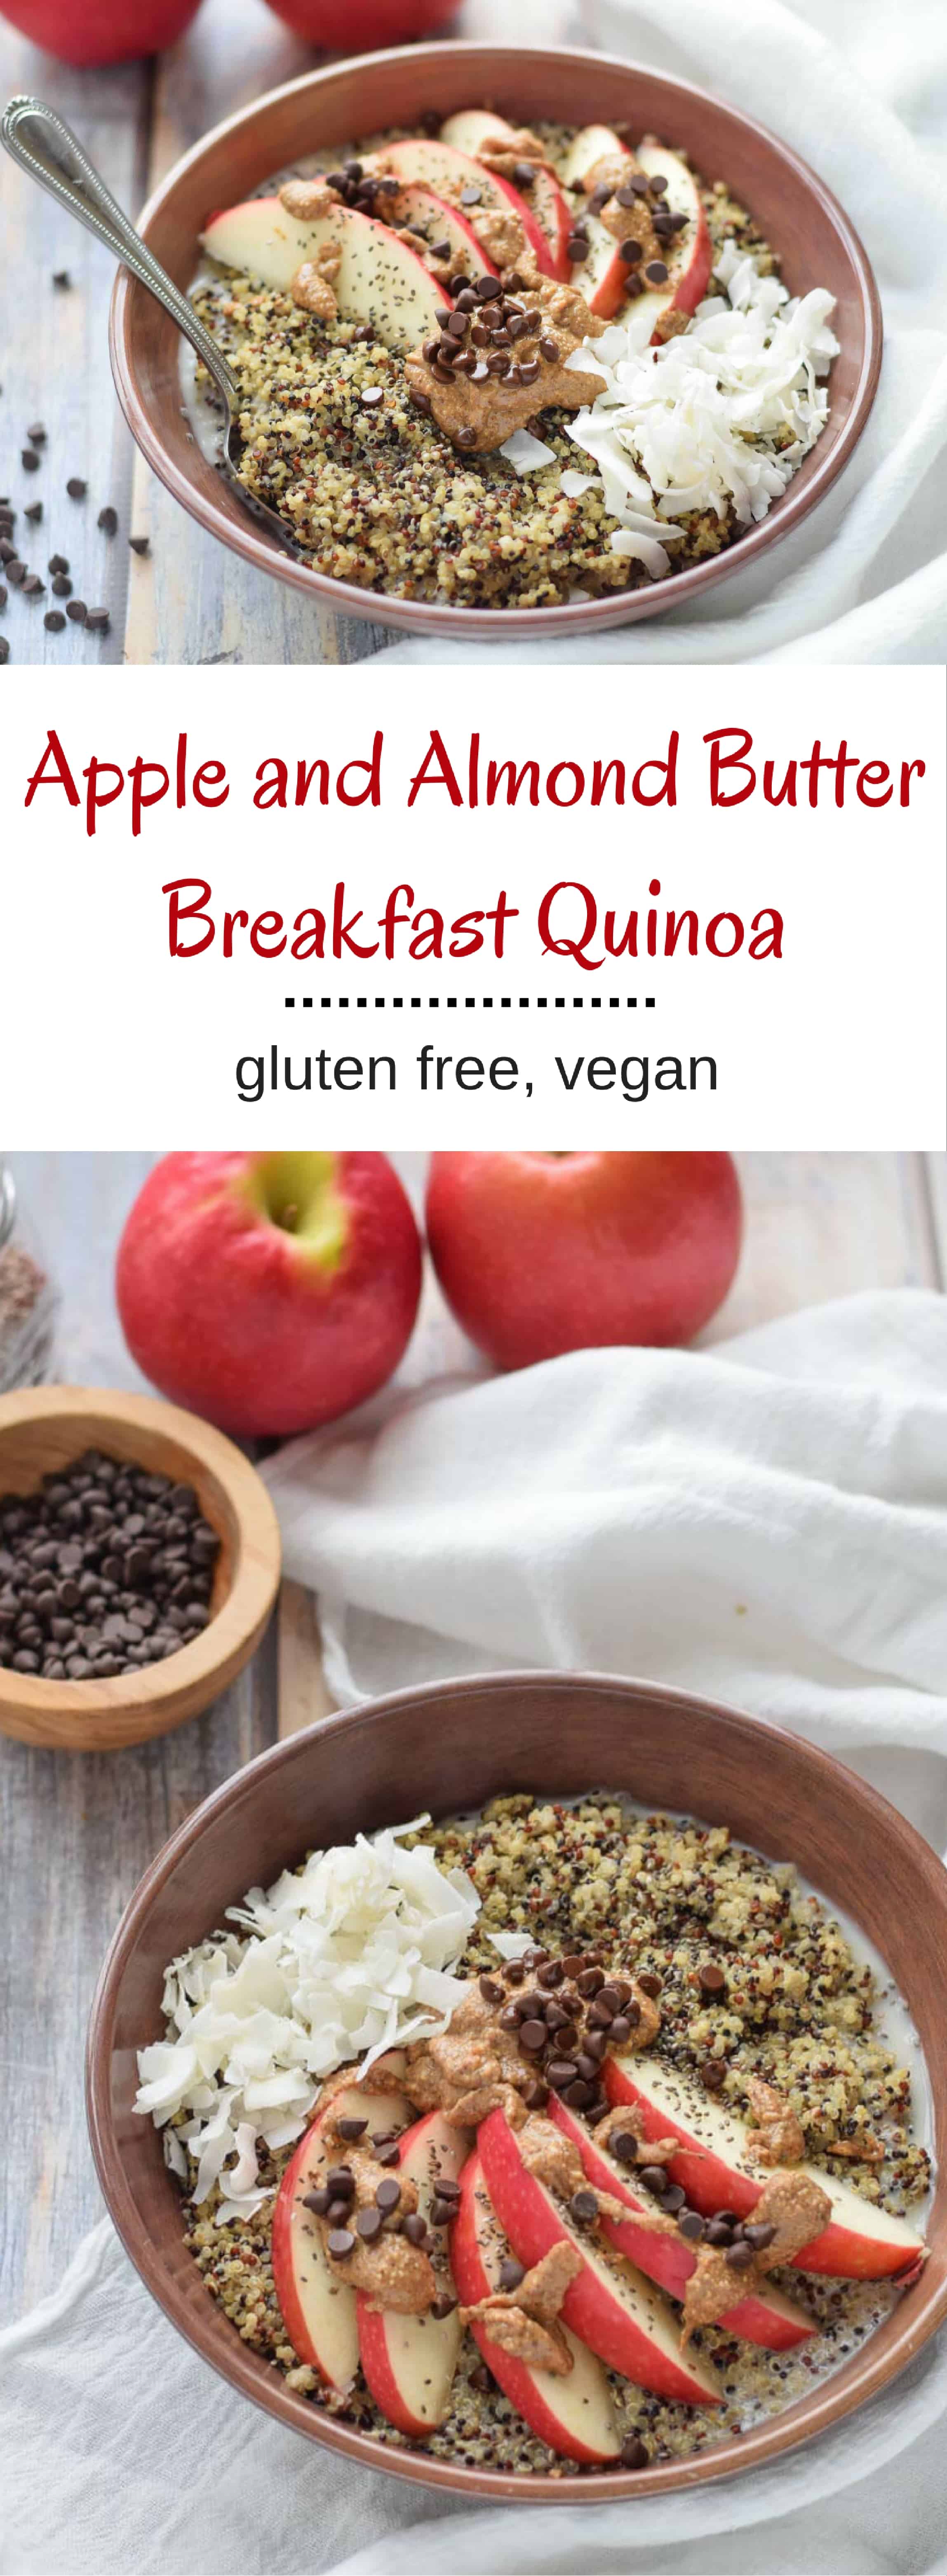 Apple and Almond Butter Breakfast Quinoa